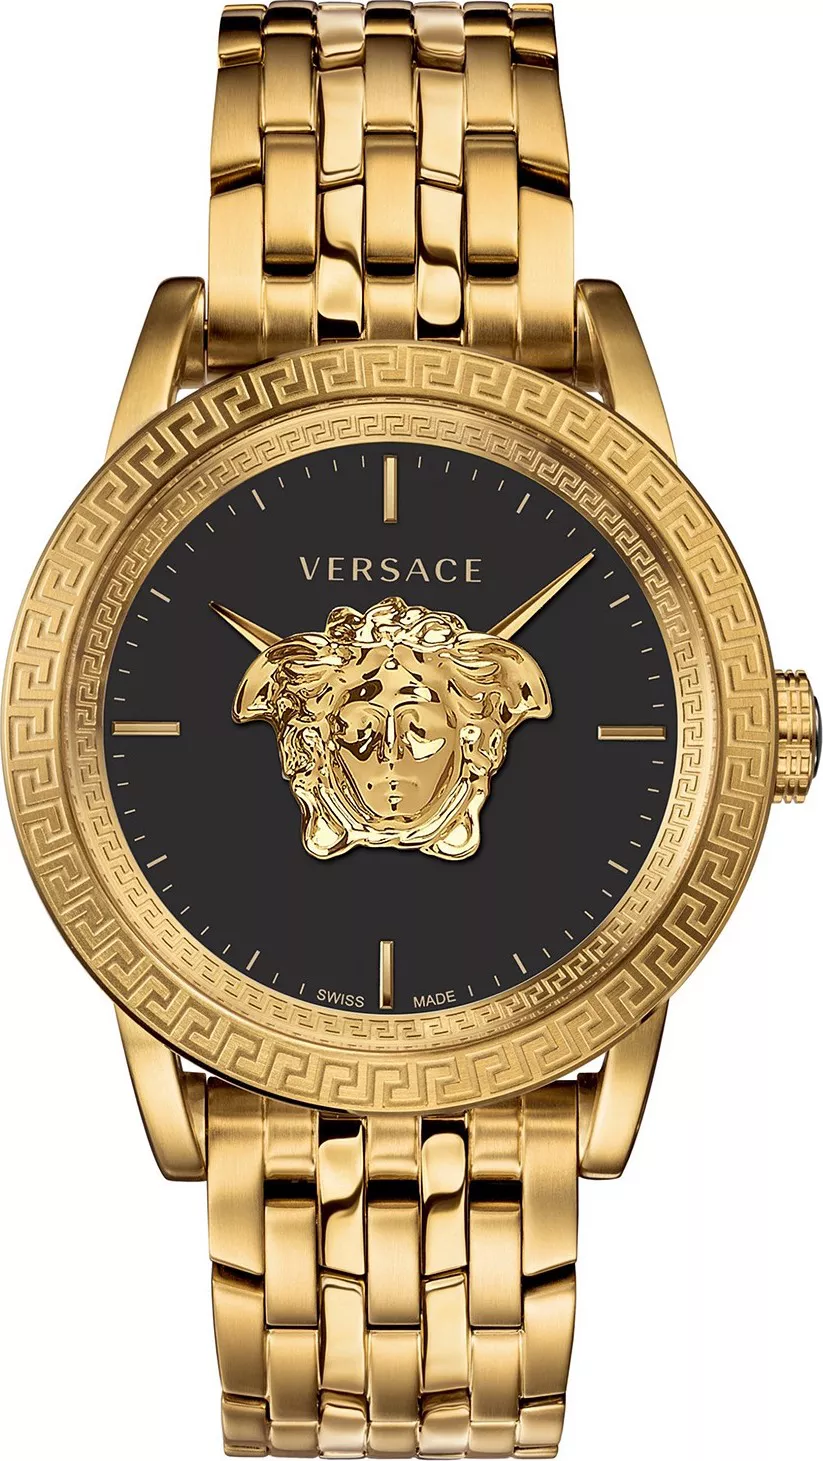 MSP: 87161 Versace Palazzo Empire Limited Watch 43 41,646,000